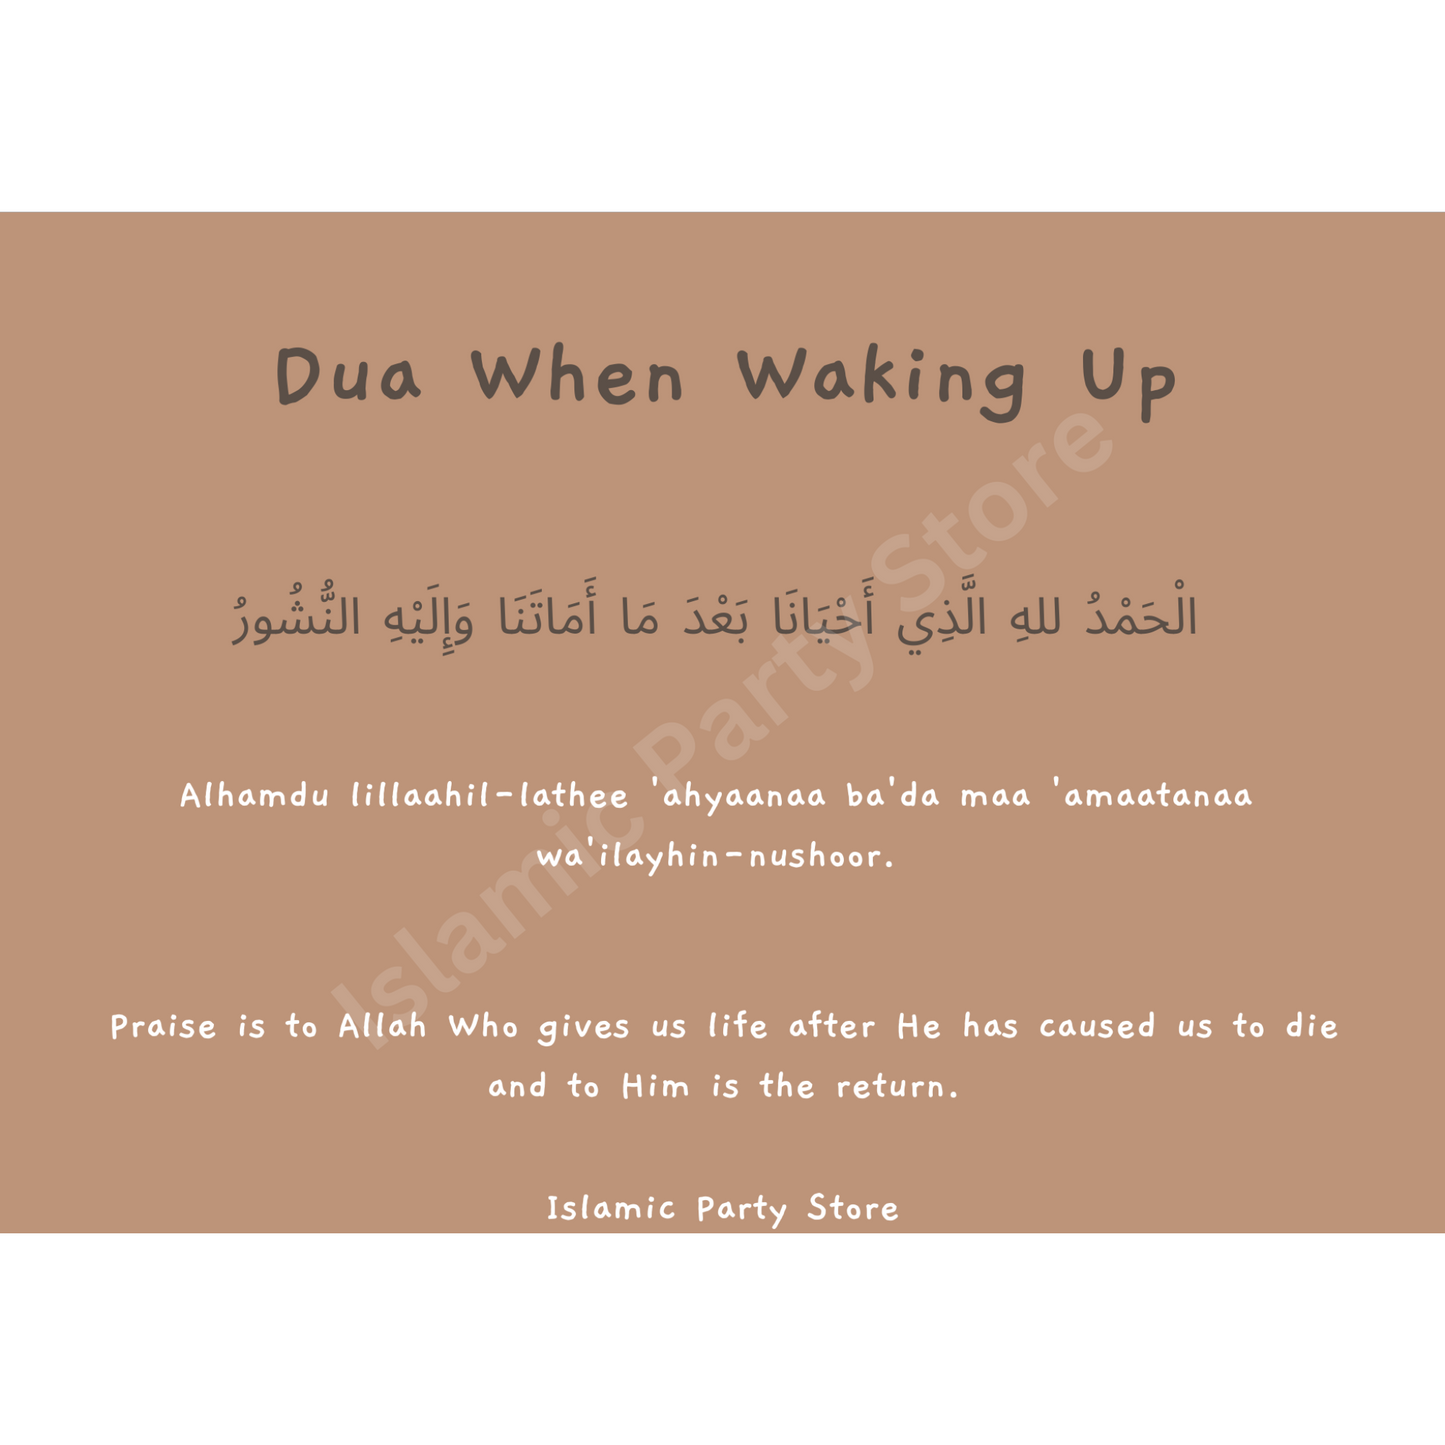 Waking Up Dua